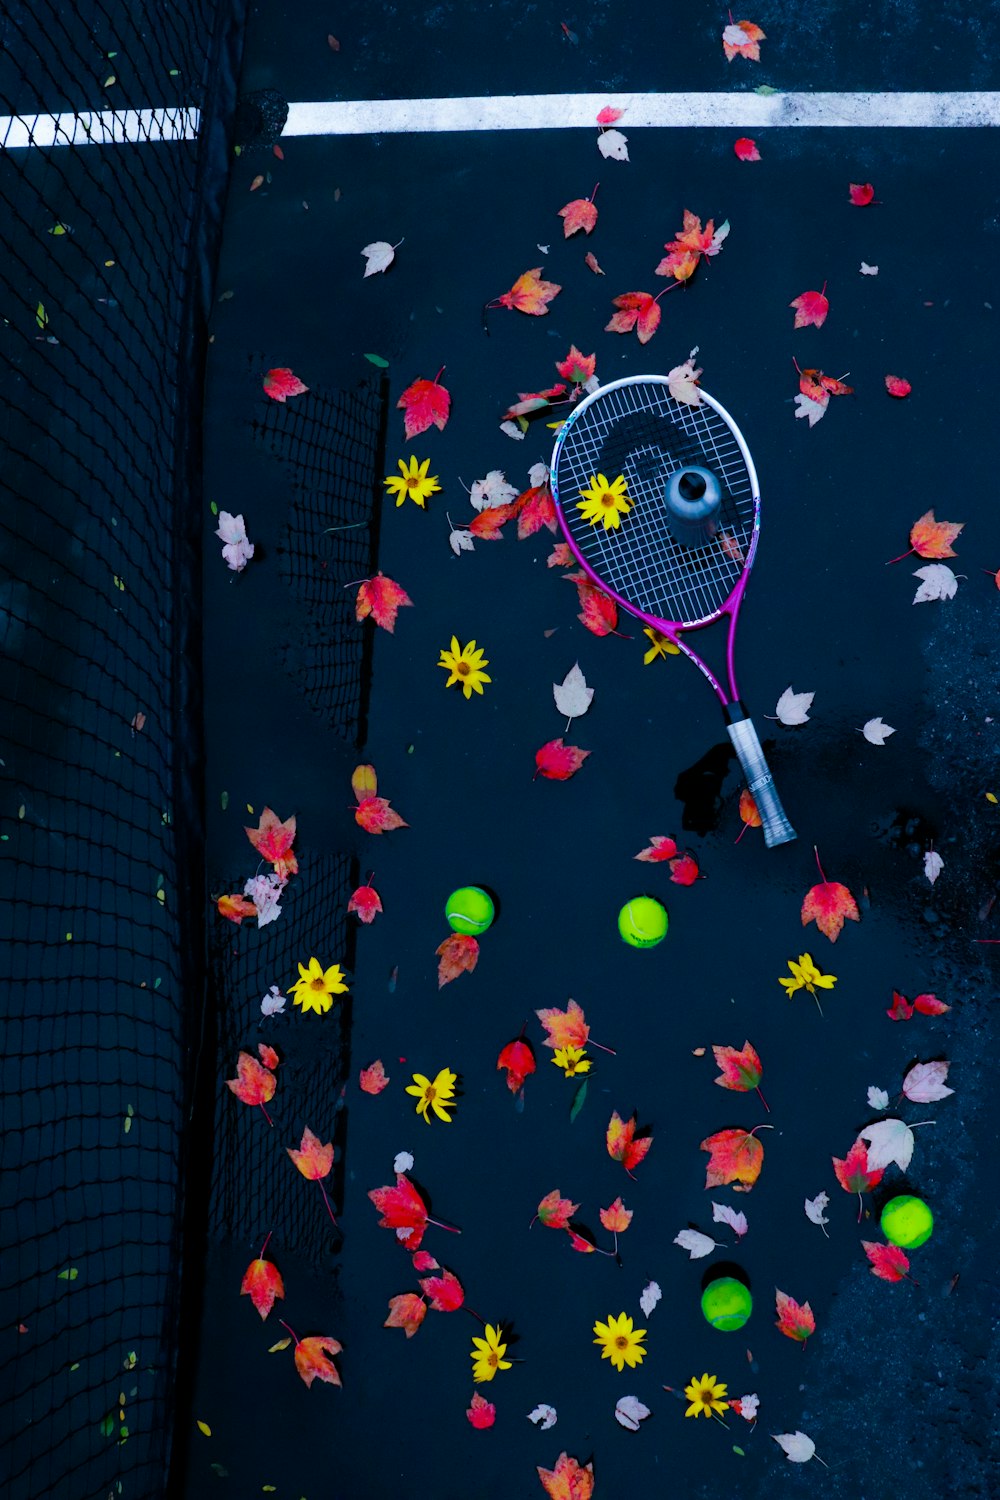 a tennis racket and balls on a tennis court